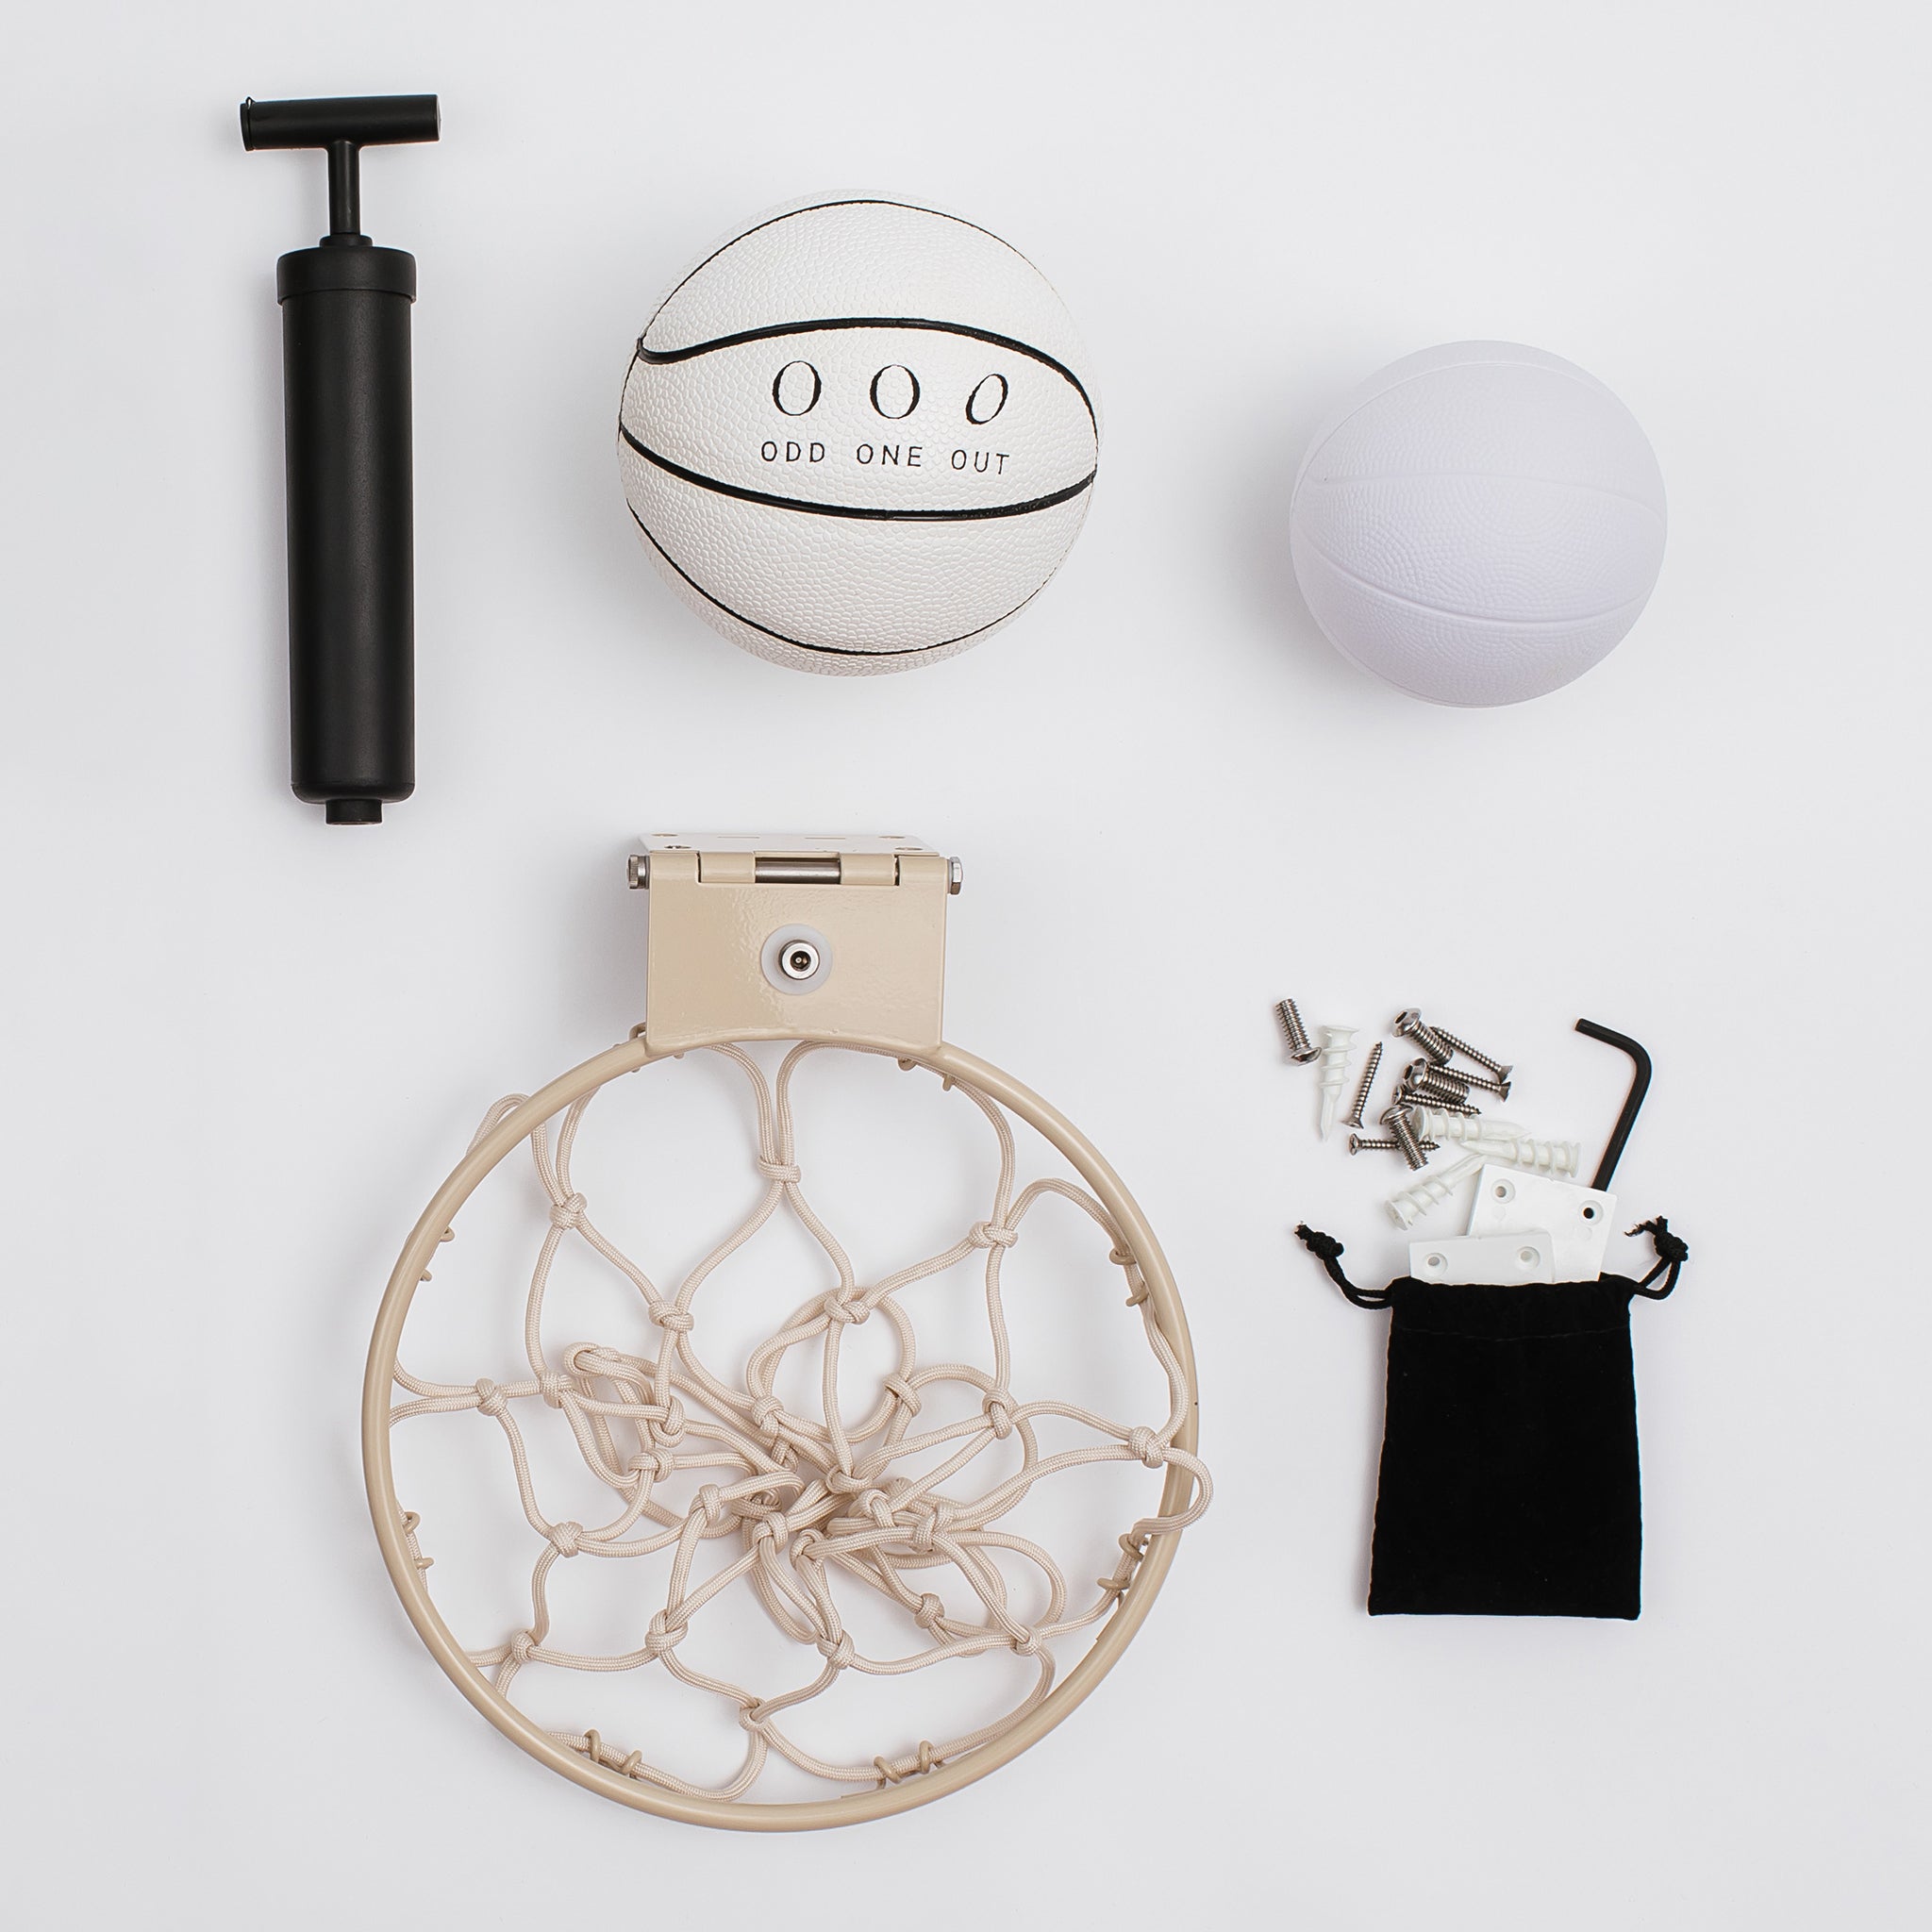 foam and rubber basketballs for the white oak mini hoop